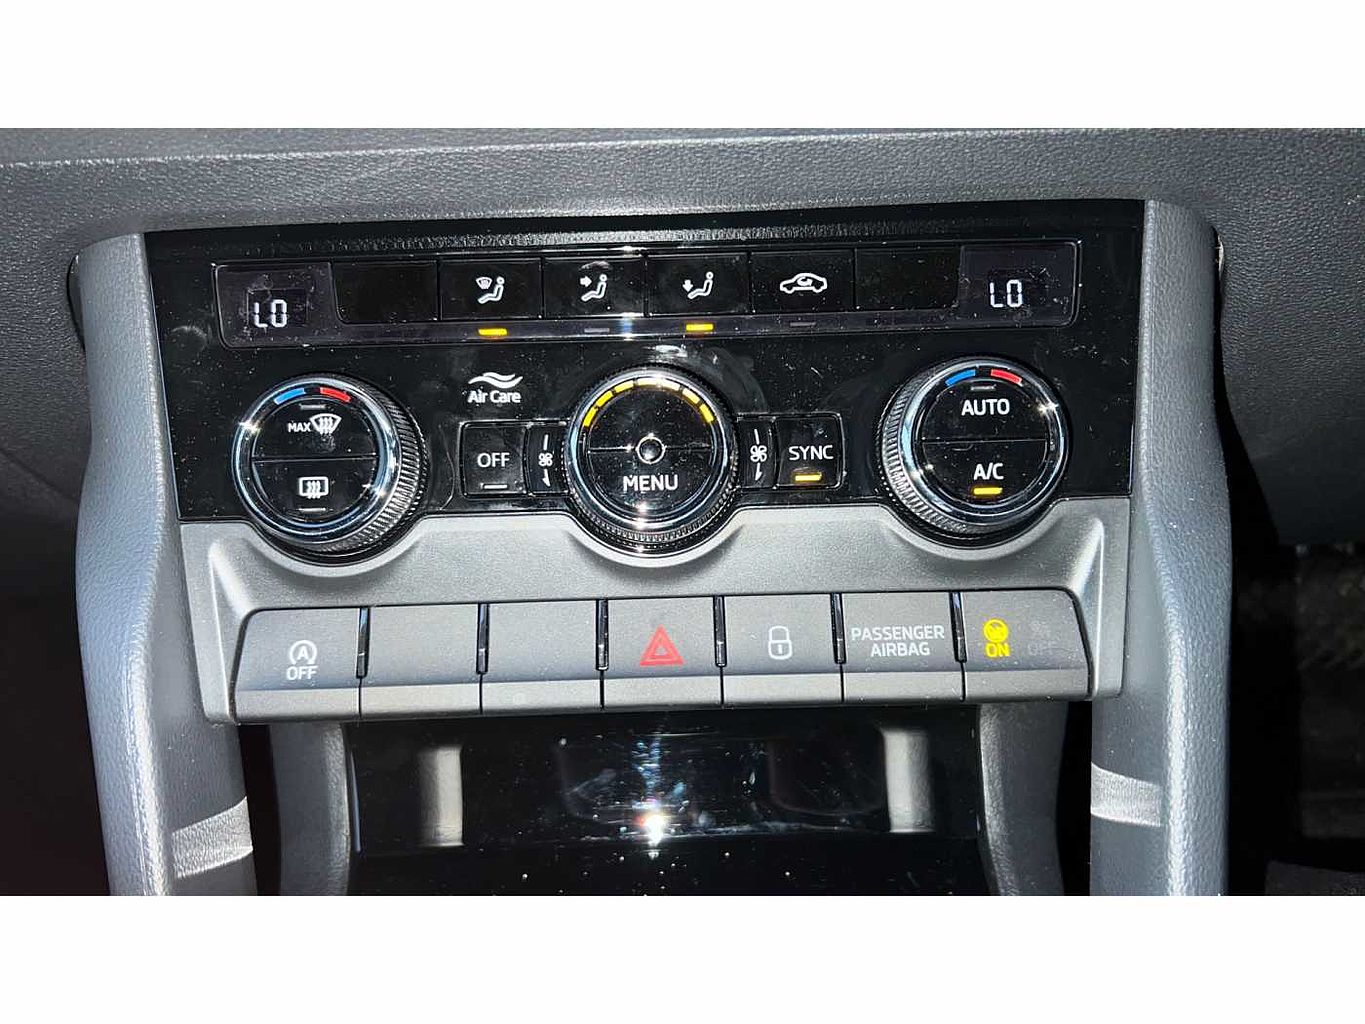 SKODA Karoq SUV 2.0TDI (116ps) SE Drive SCR DSG